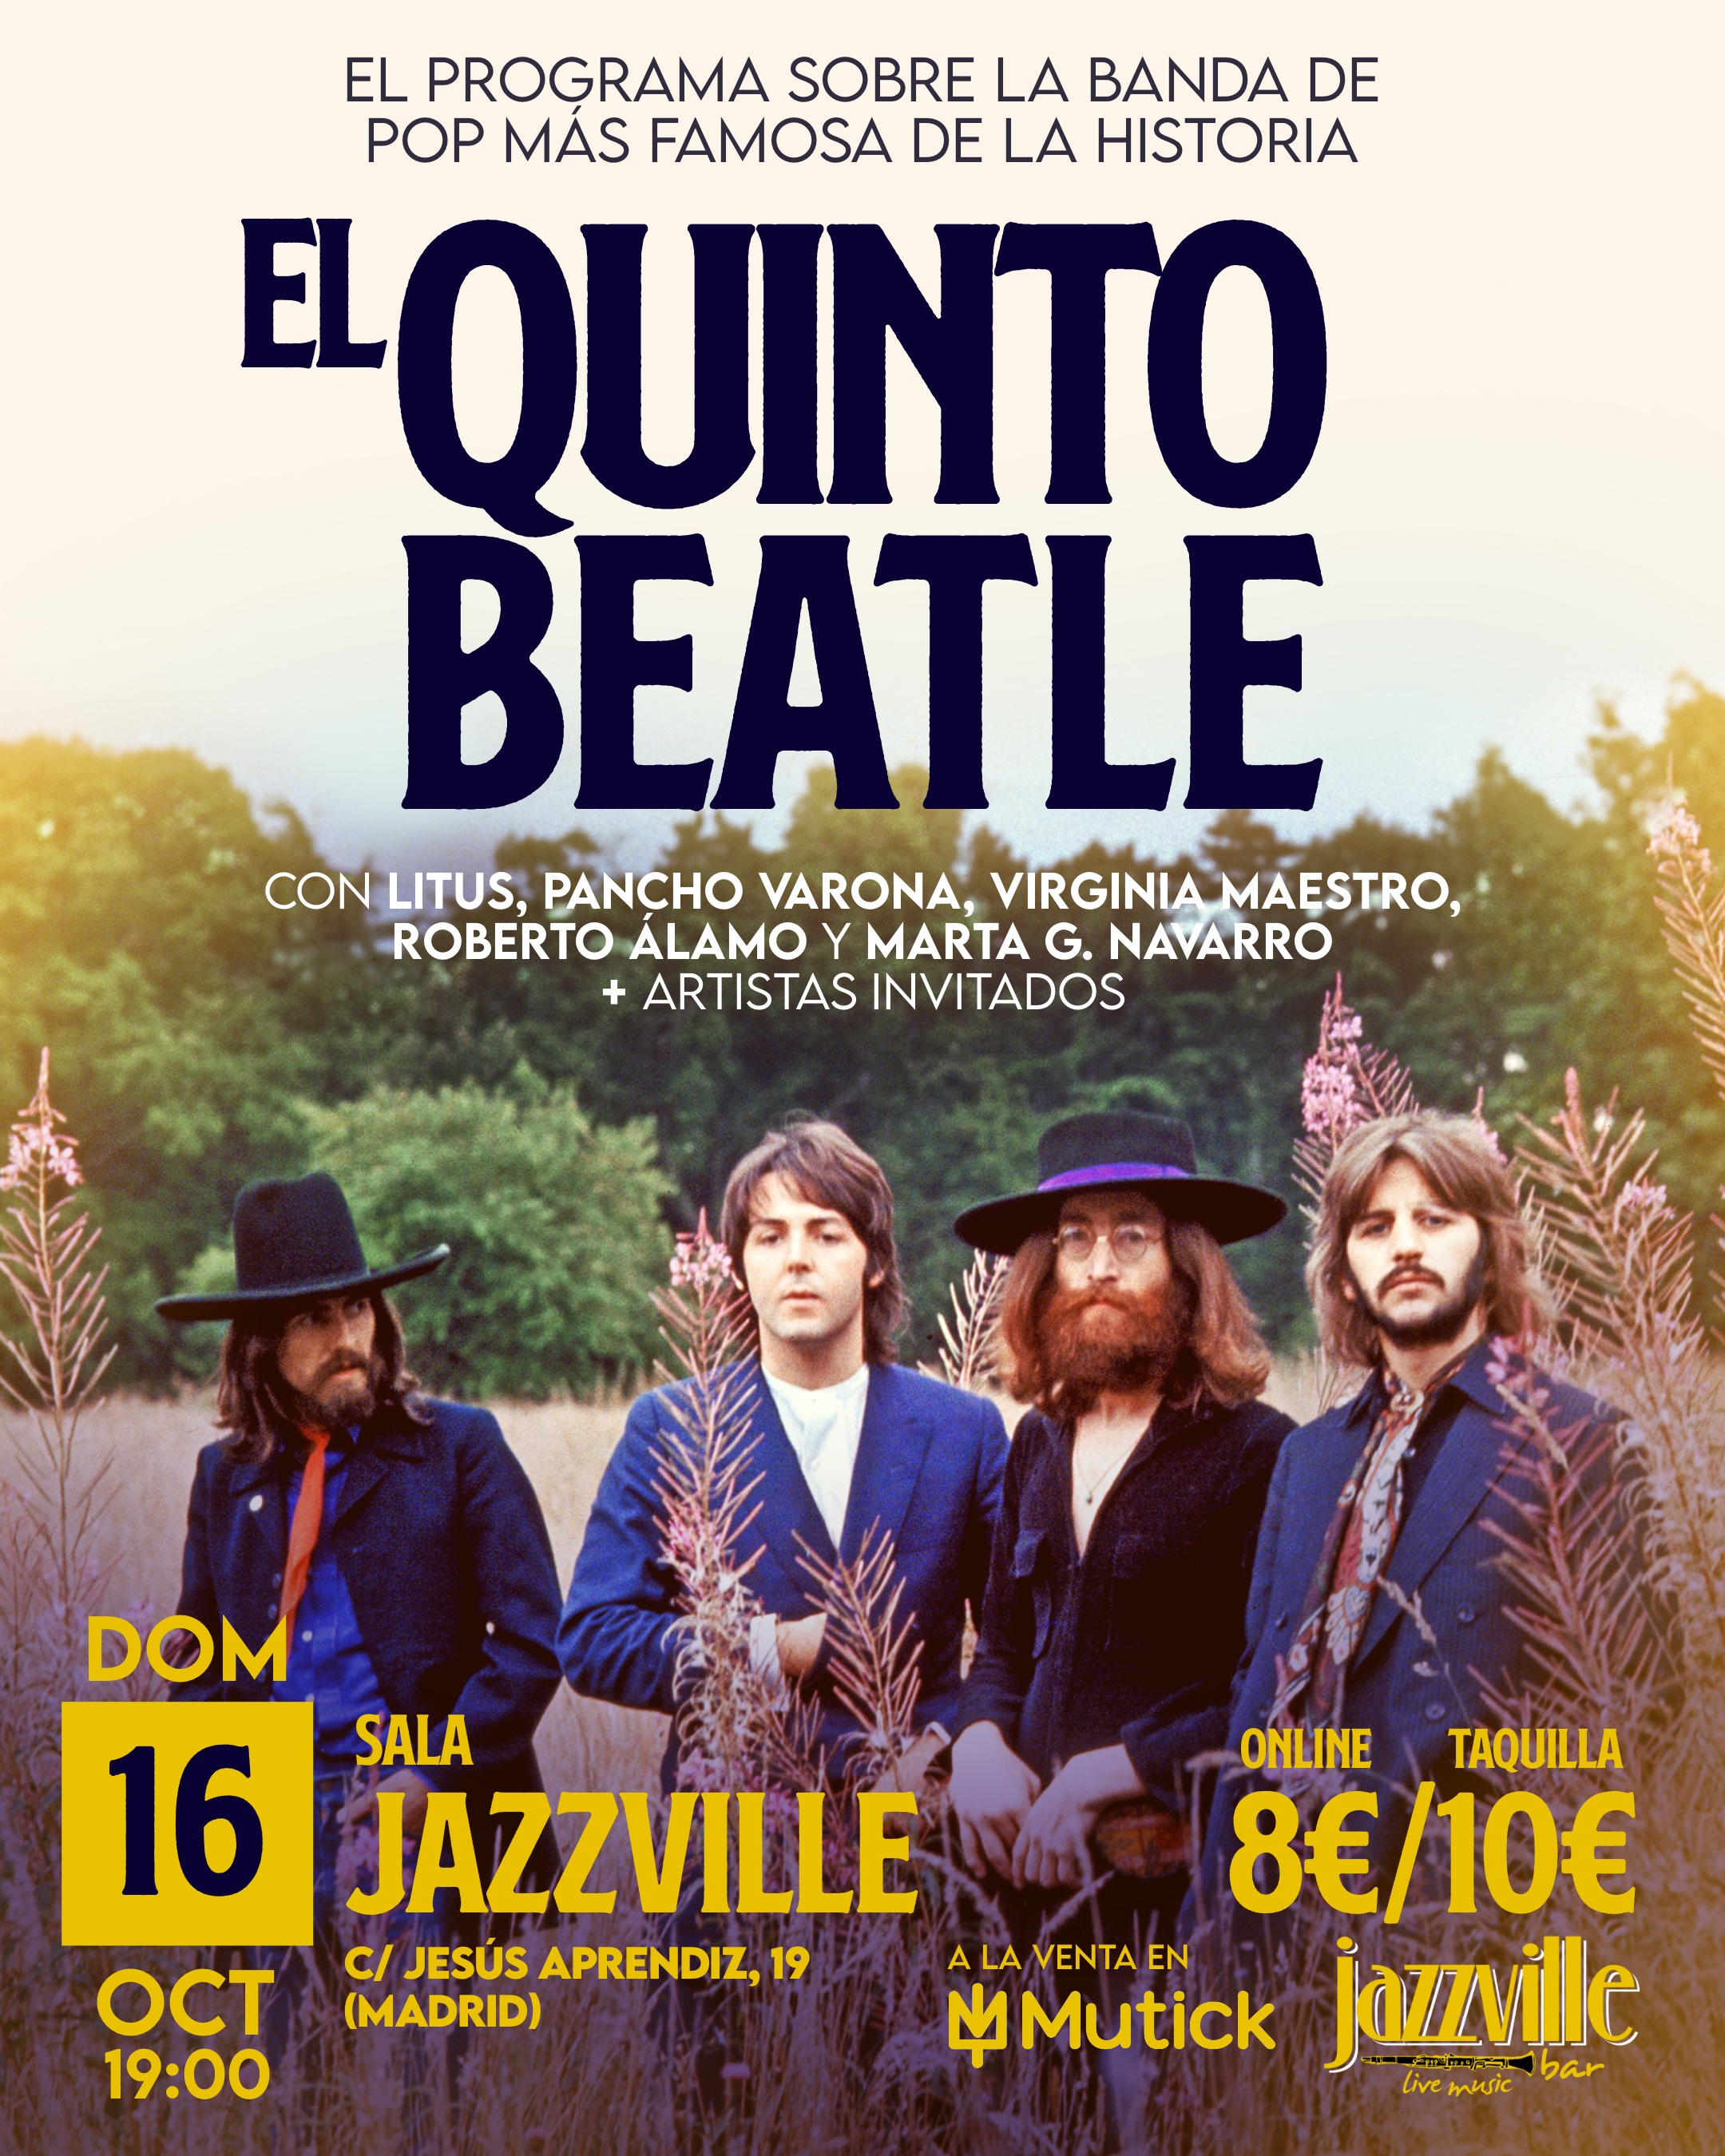 El Quinto Beatle Live en Madrid - Mutick